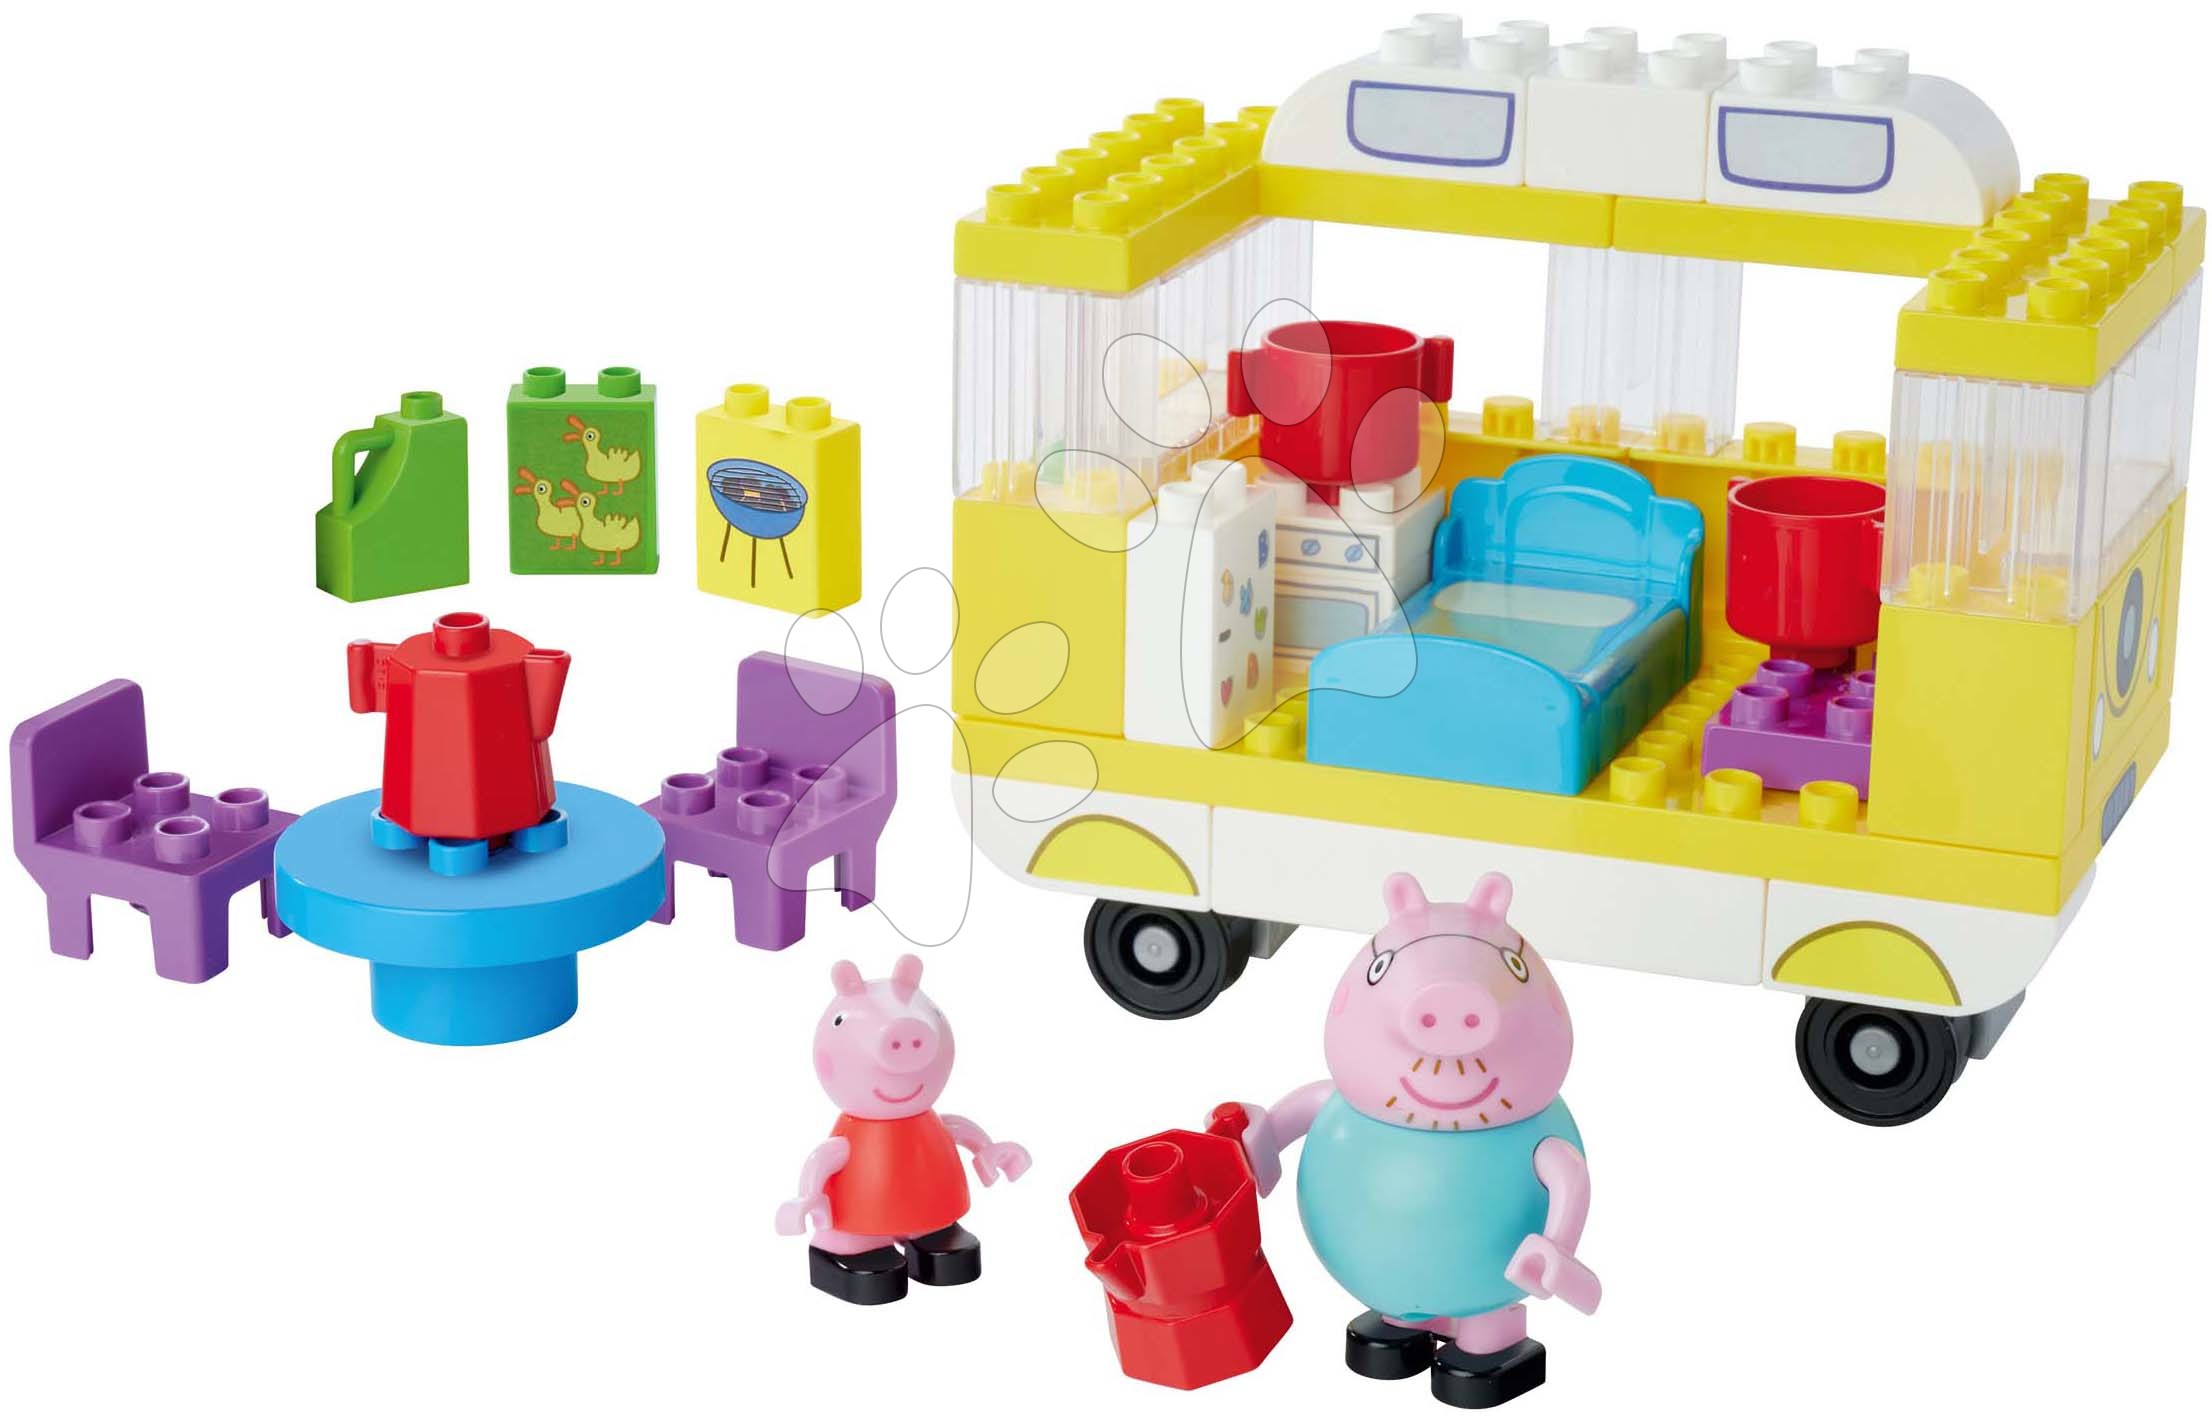 Stavebnice BIG-Bloxx jako lego - Stavebnice Peppa Pig Campervan PlayBig Bloxx BIG auto karavan s výbavou a 2 postavičky 52 dílů od 18 měsíců